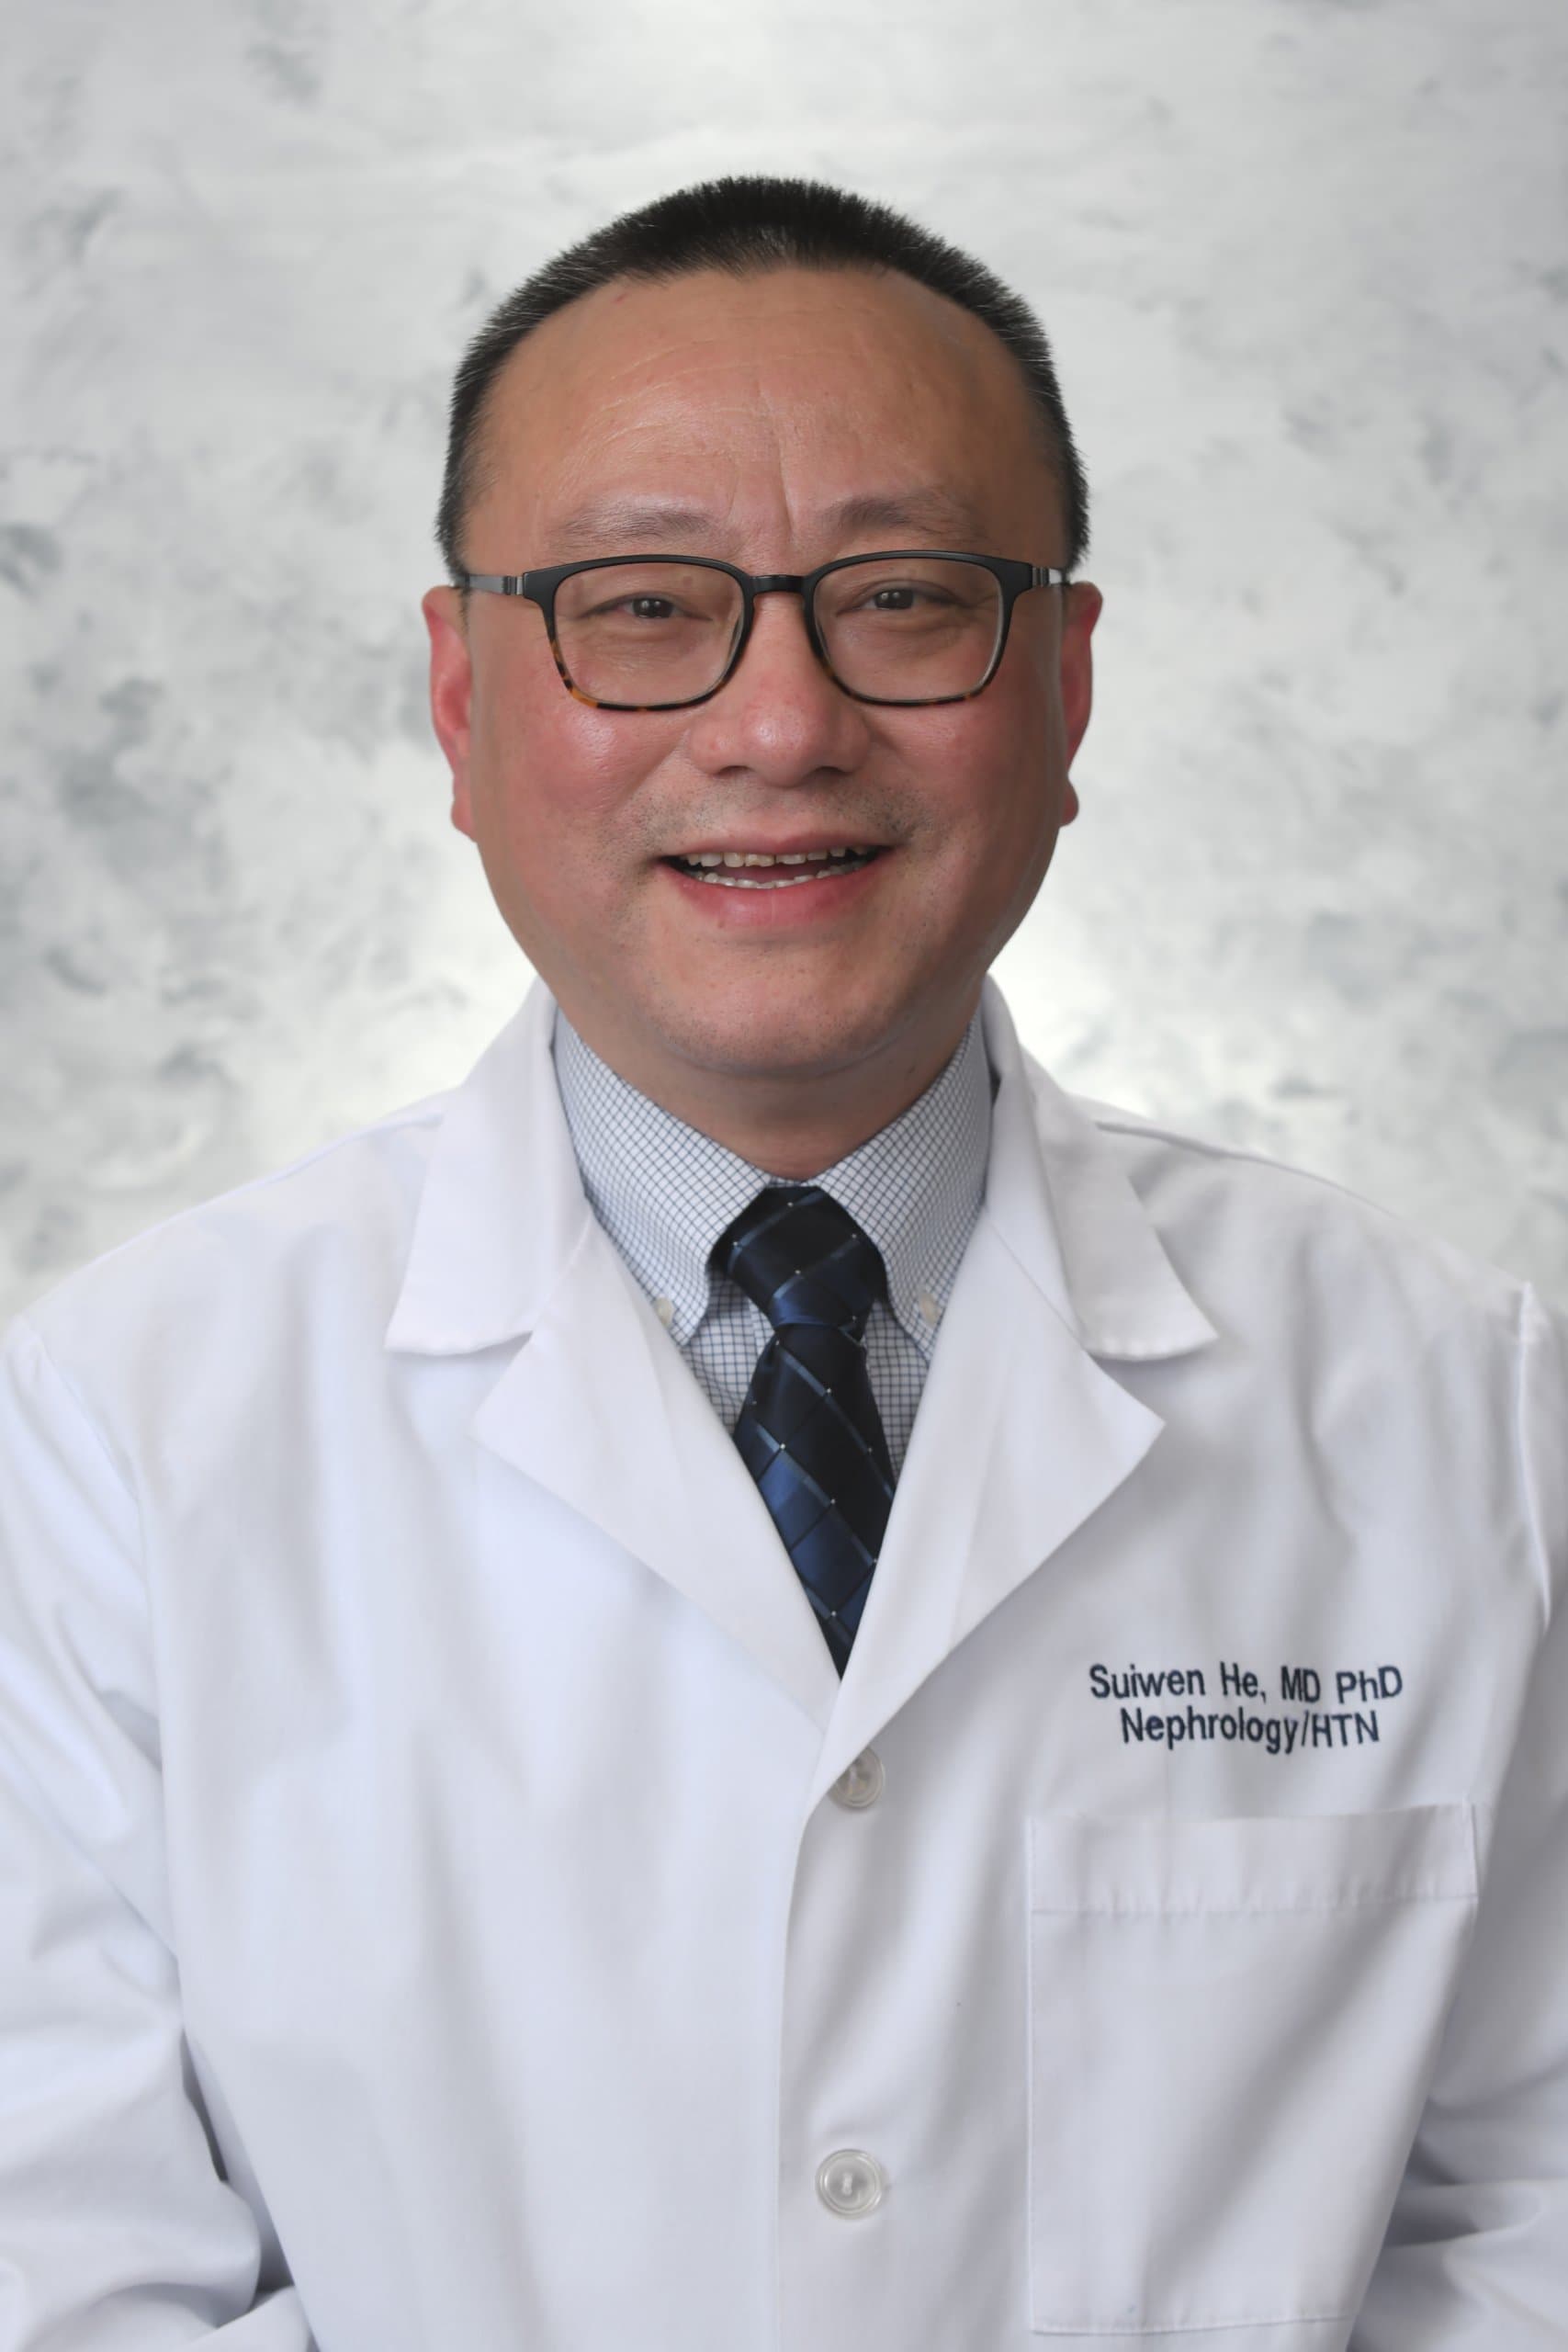 photo of Dr. Suiwen He